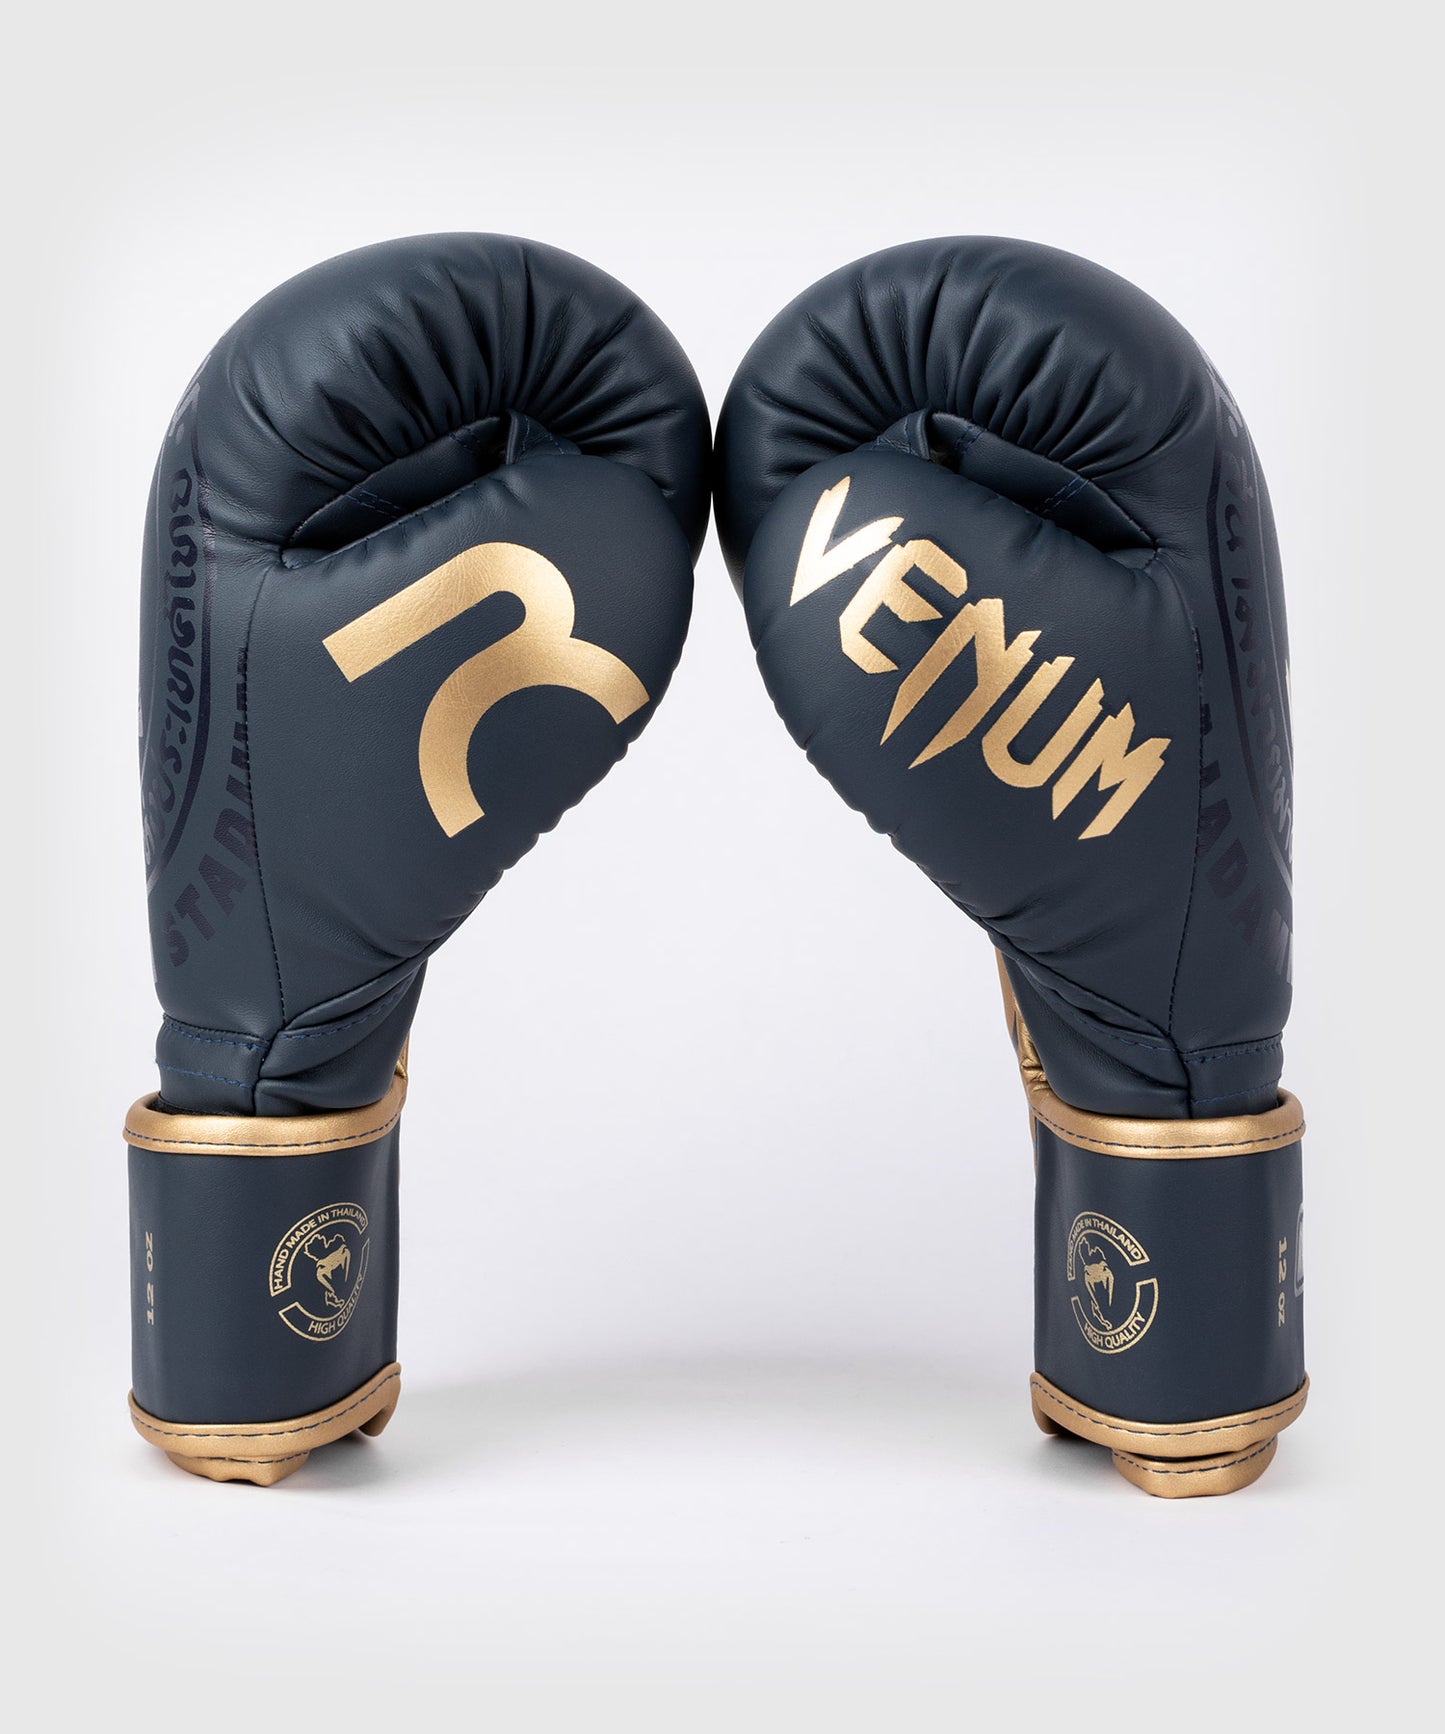 RAJADAMNERN X Venum Boxing Gloves - Navy Blue